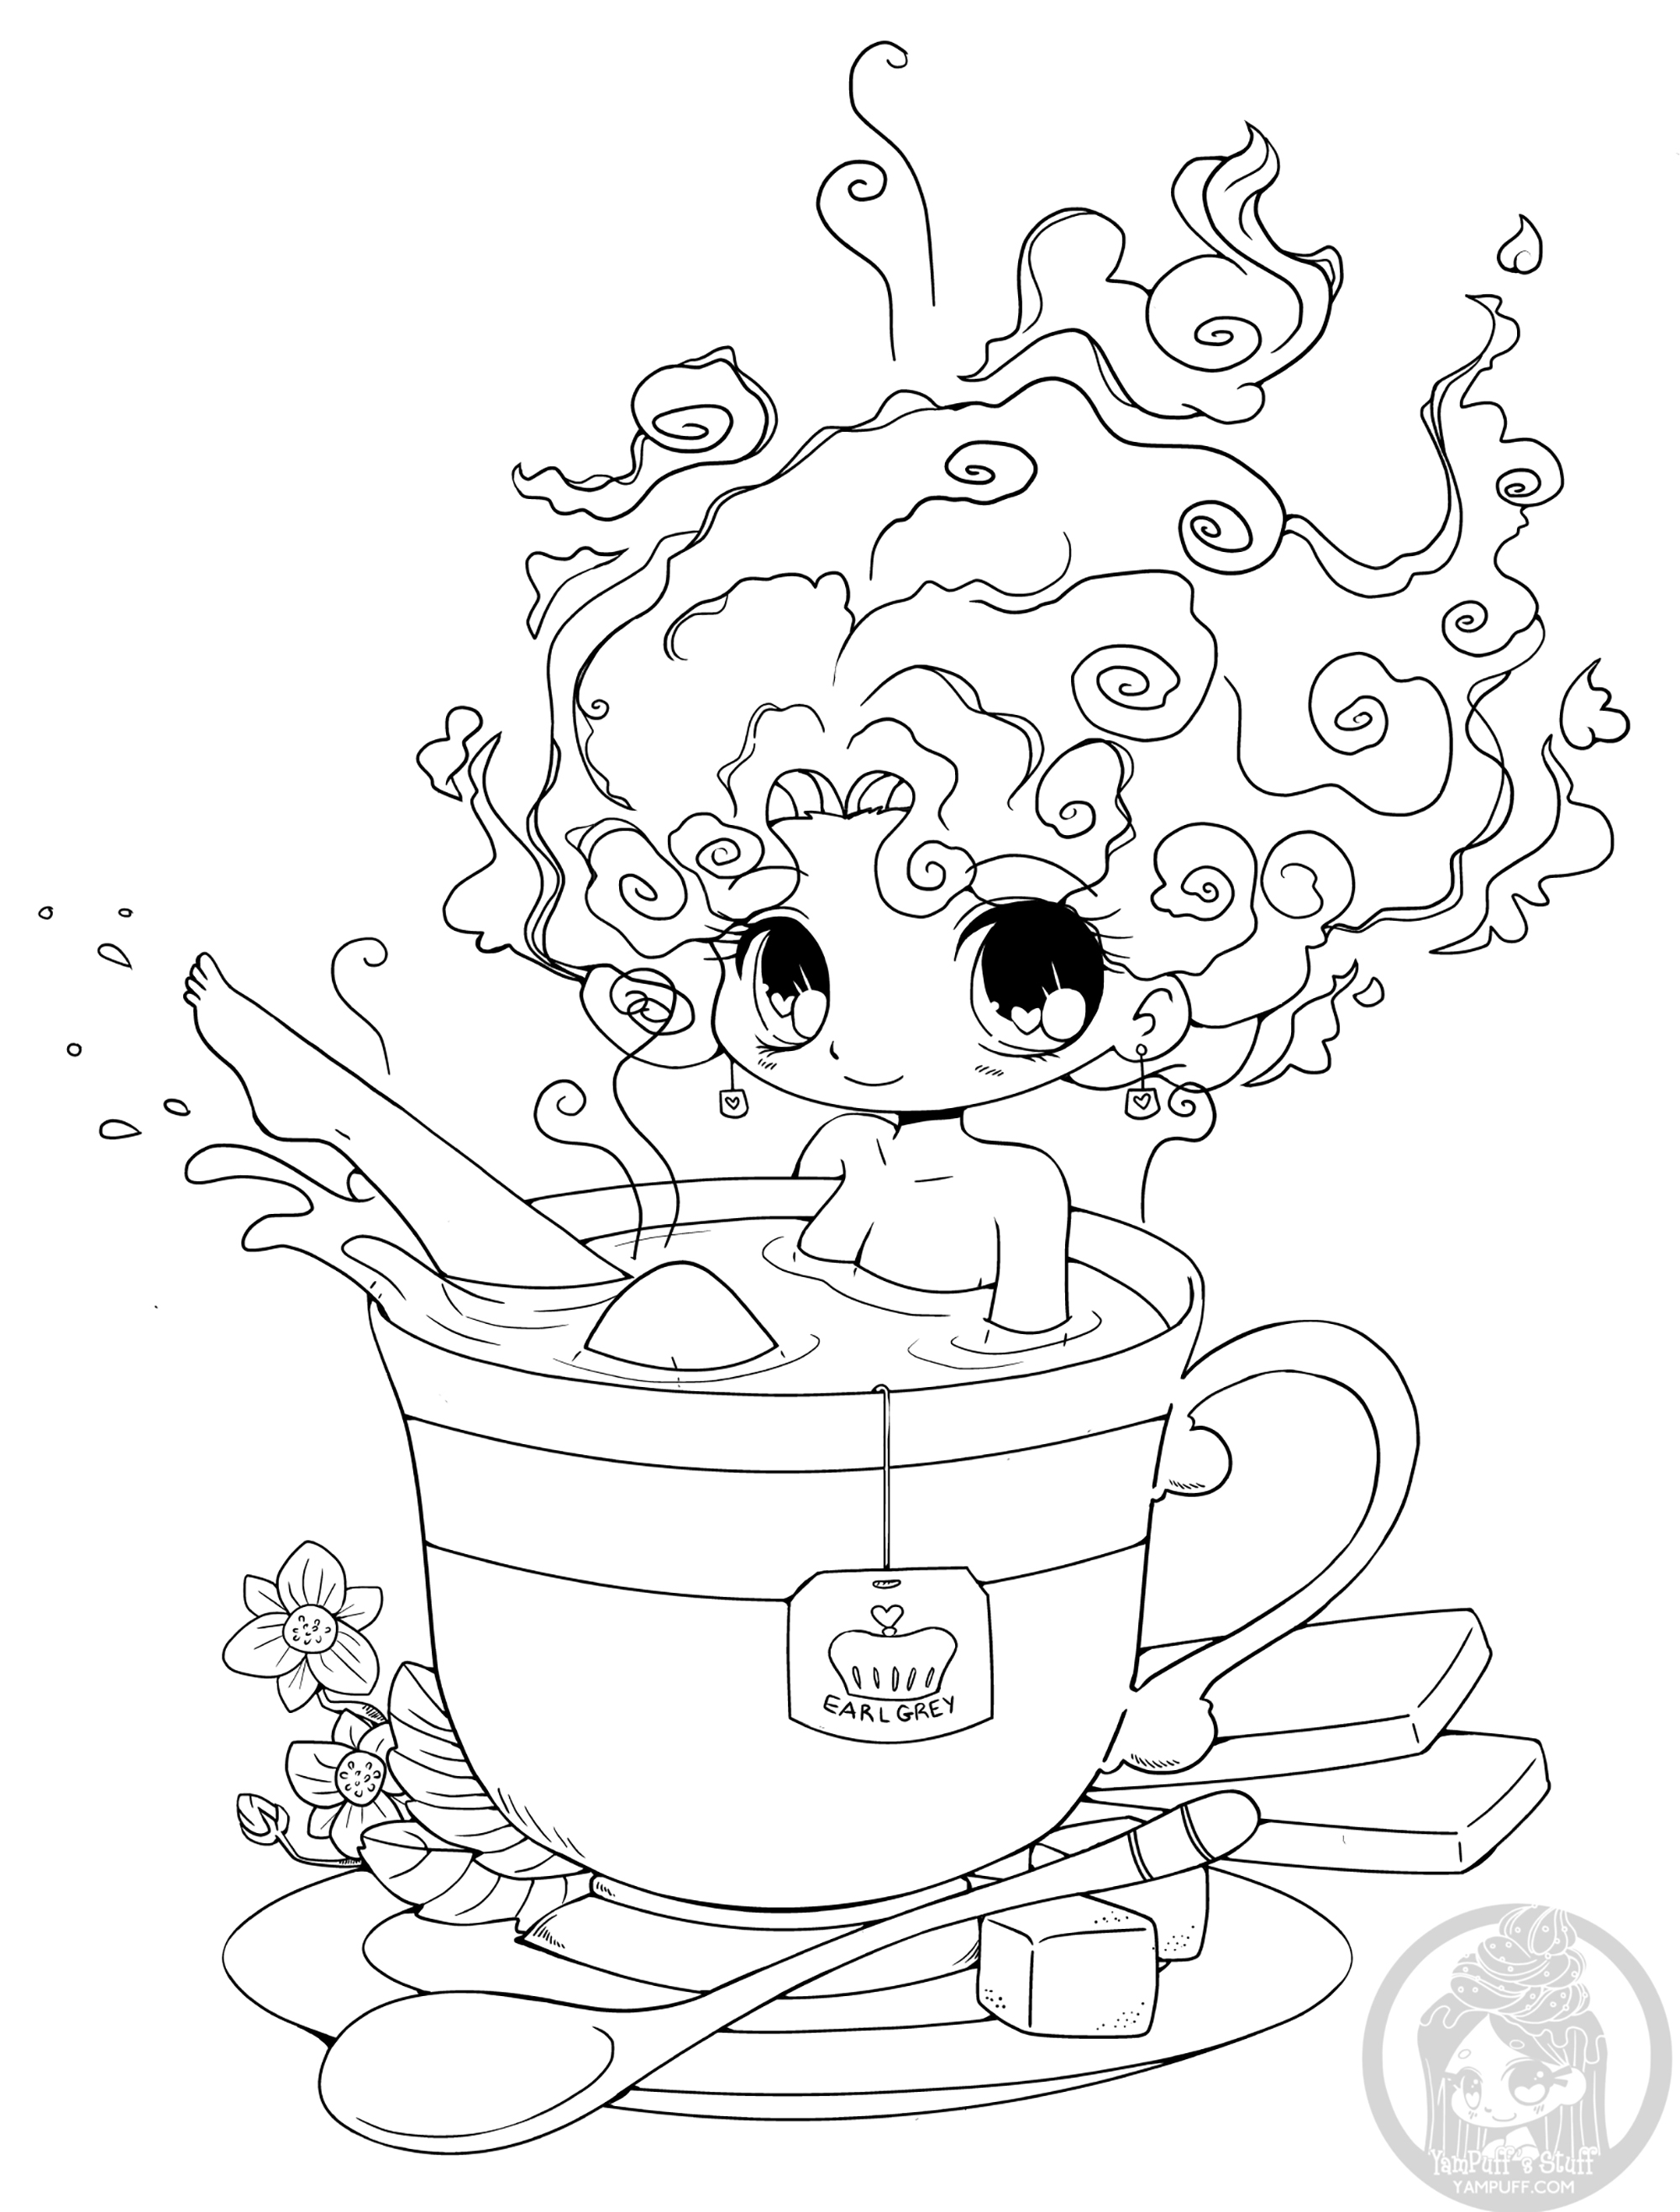 Dibujo de taza de té para colorear  Dibujos para colorear imprimir gratis